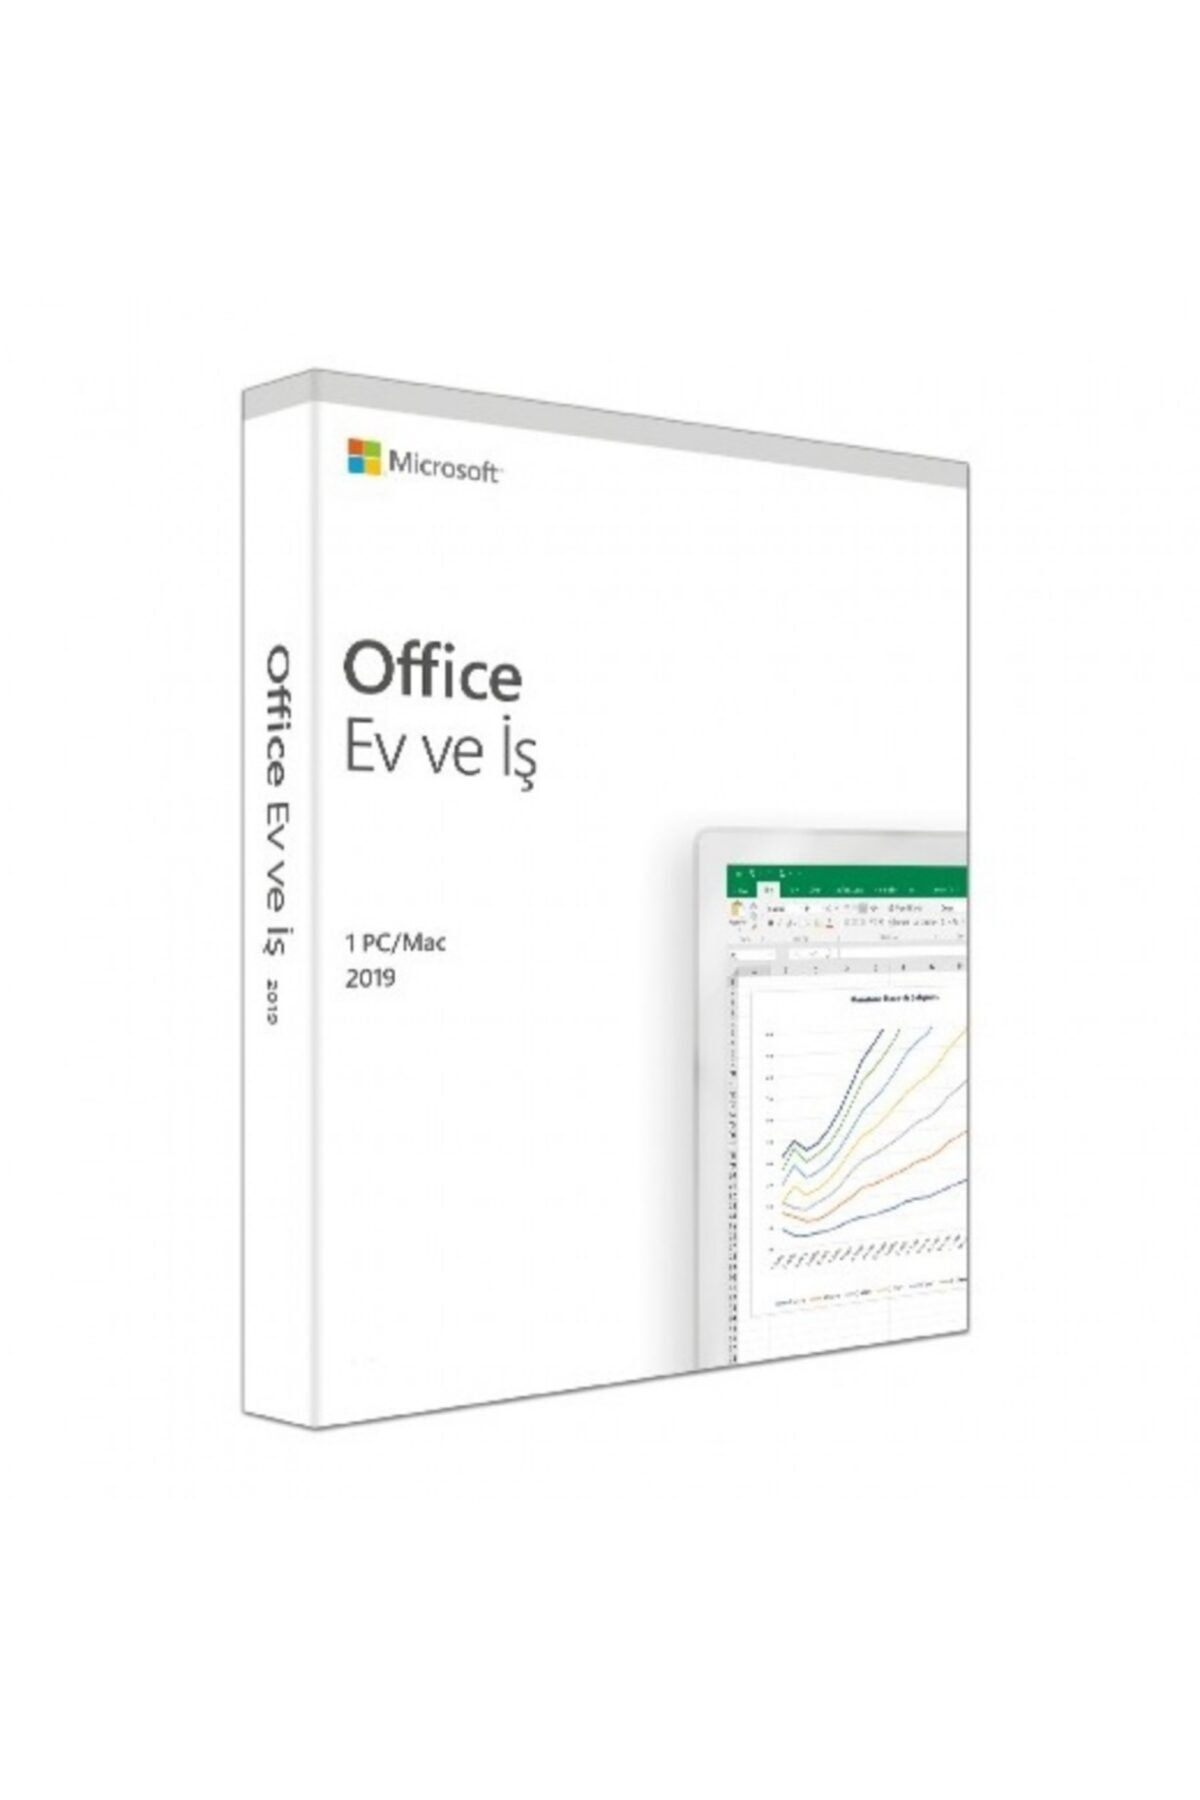 Microsoft Office 2019 Ev Ve Iş Trk Kutu T5d-03334